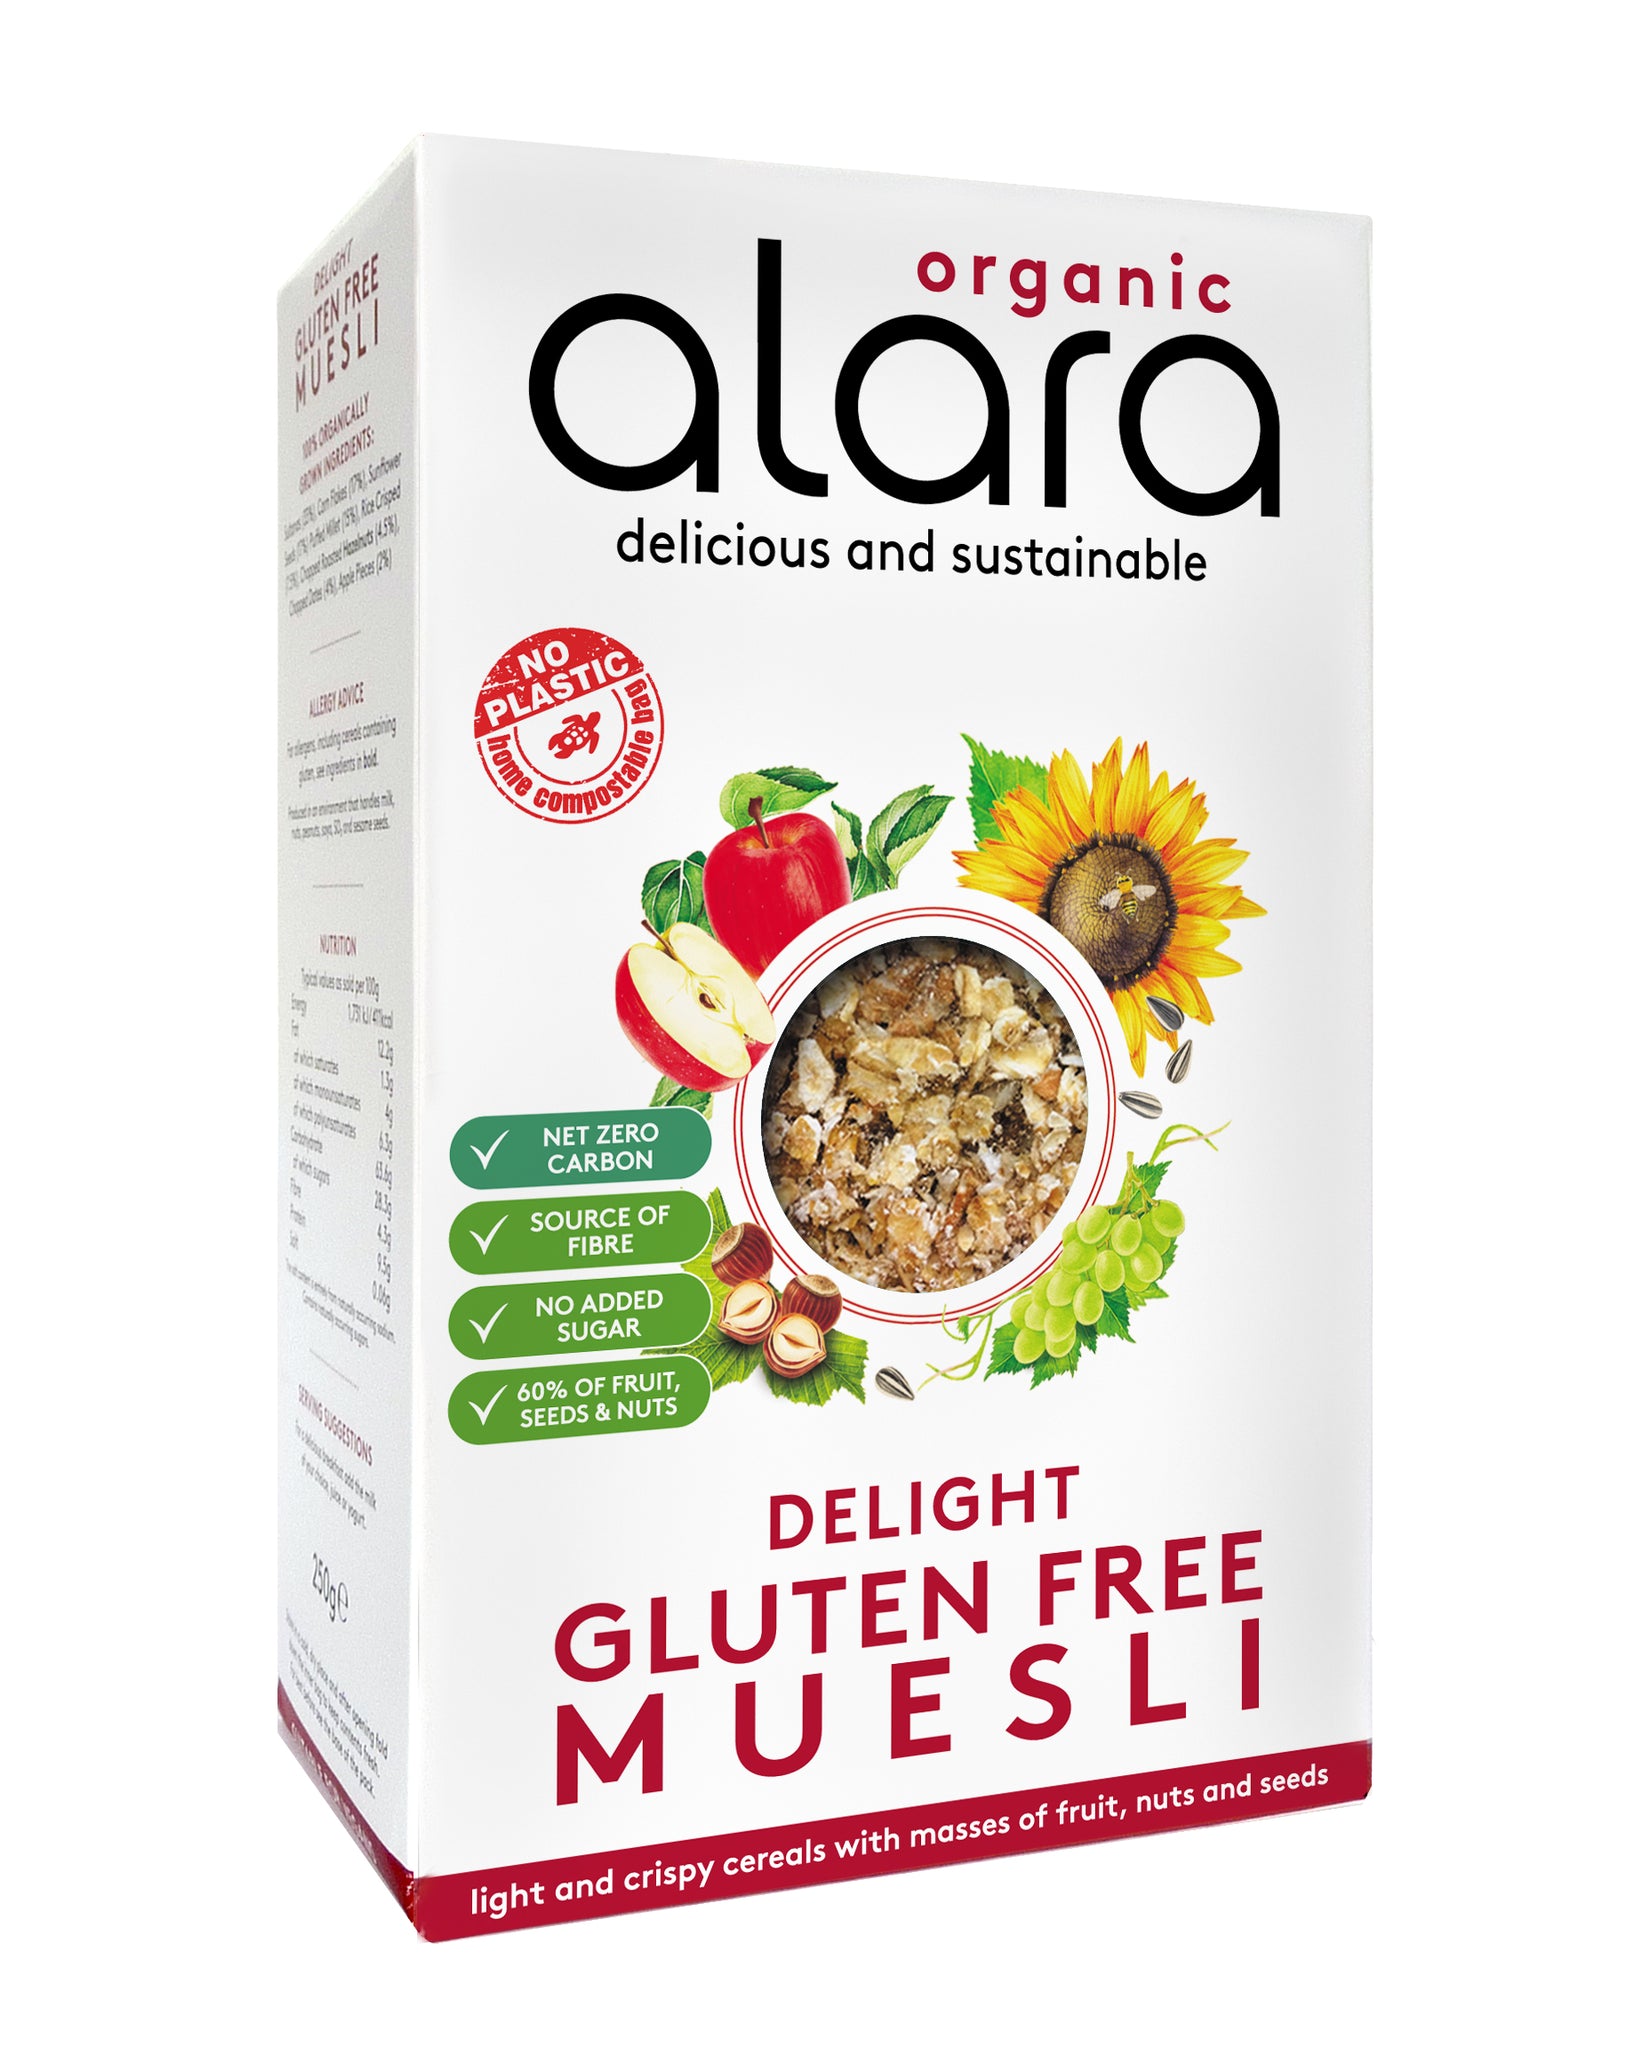 Organic Alara Delight Gluten-free Muesli 250g BBE:11/24 sale one left